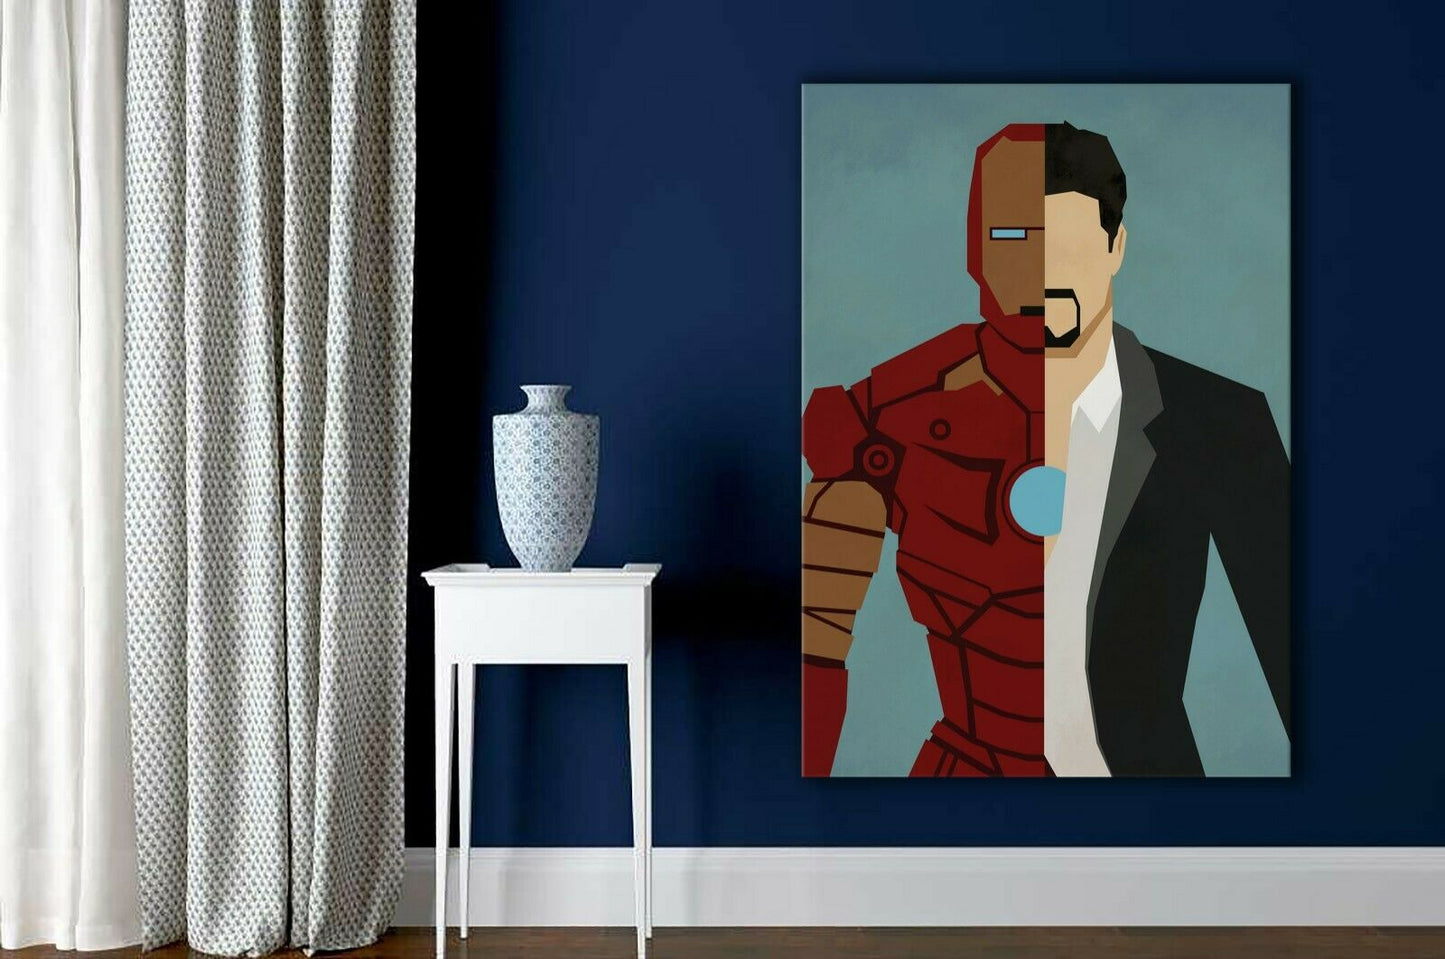 Ironman Framed Canvas Prints Stretched Avengers Marvel super hero Robert Downey